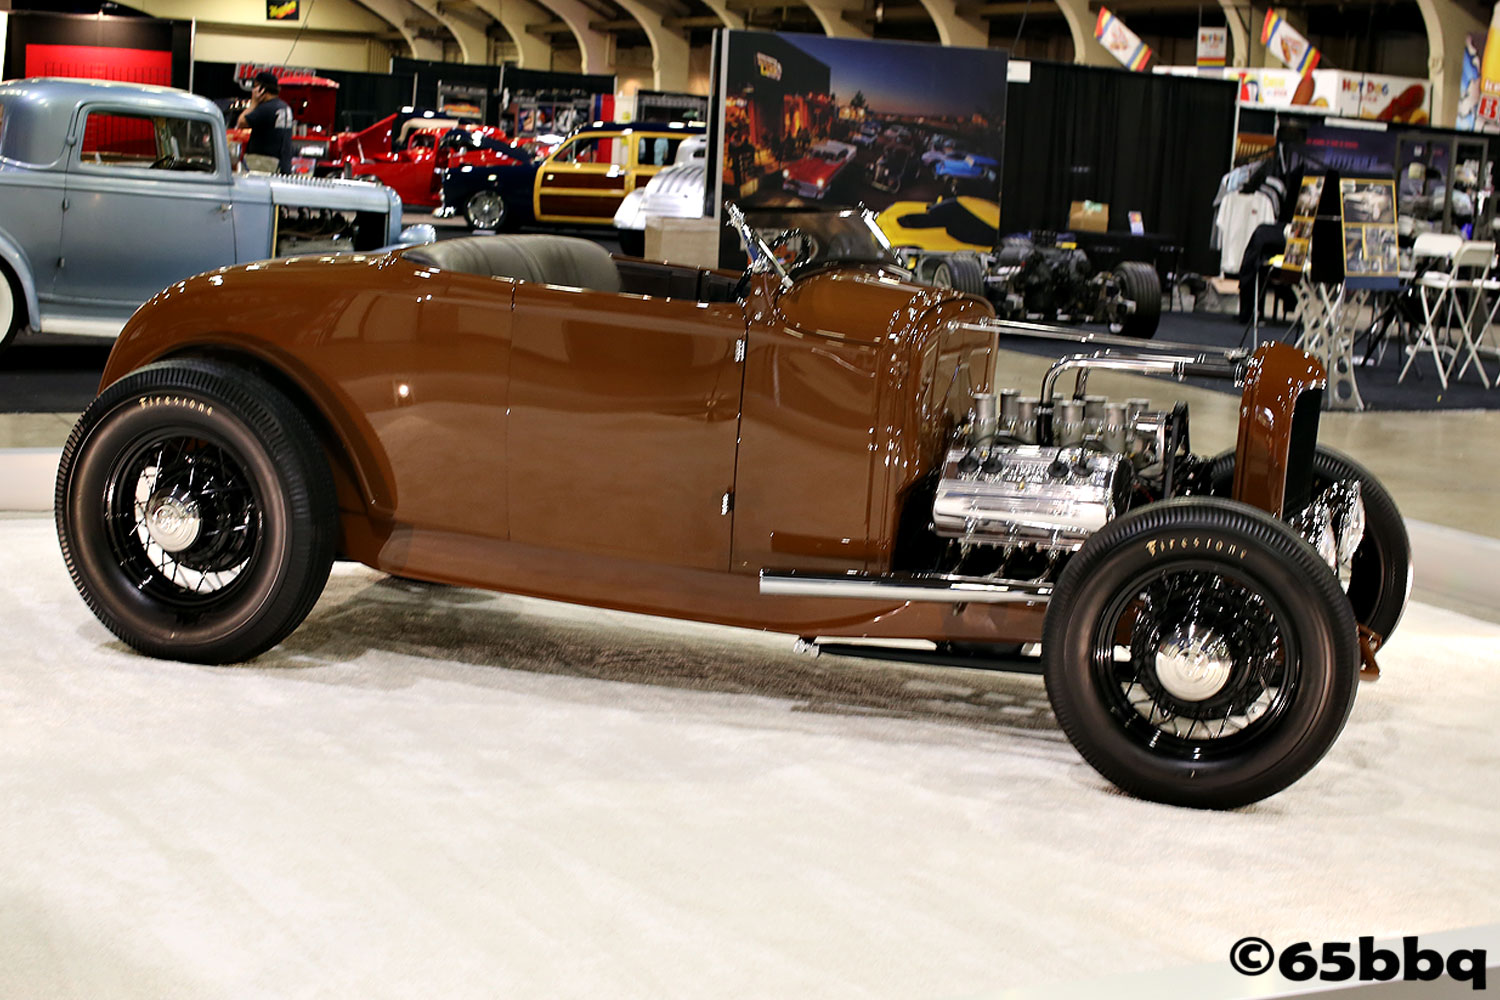 grand-national-roadster-show-2019 1930 roadster 65bbq-24.jpg